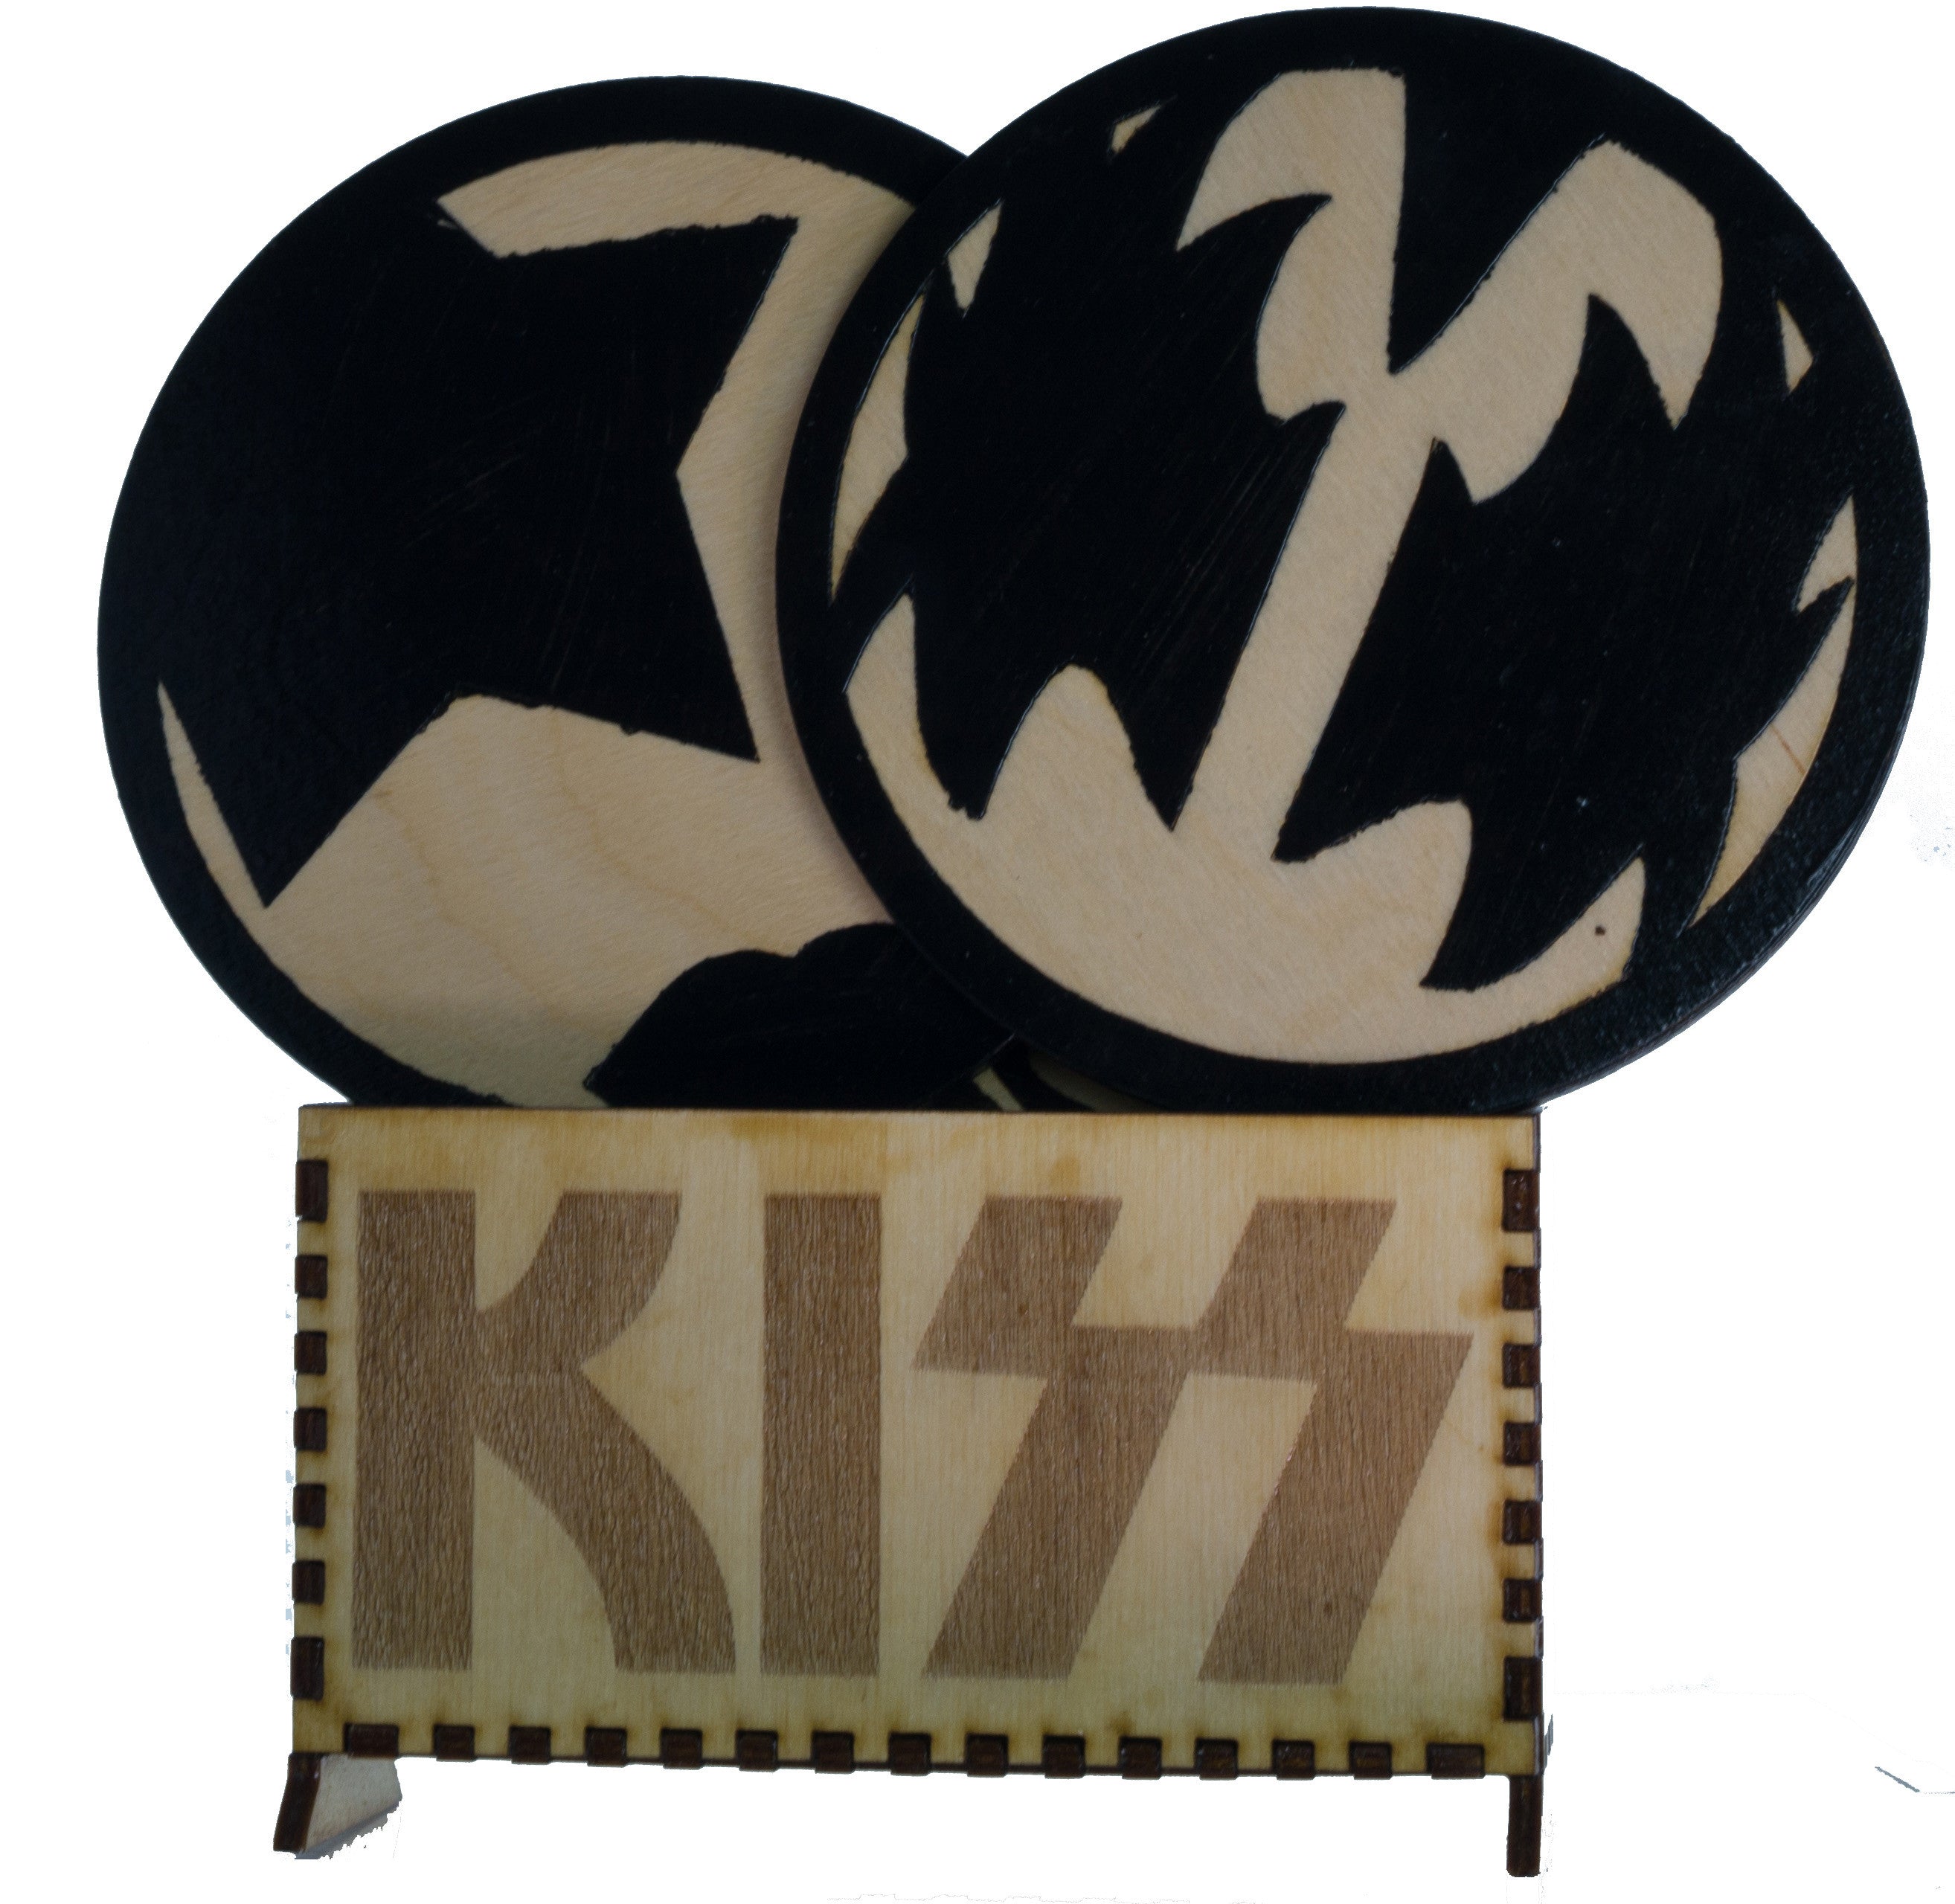 KISS Mask Coasters